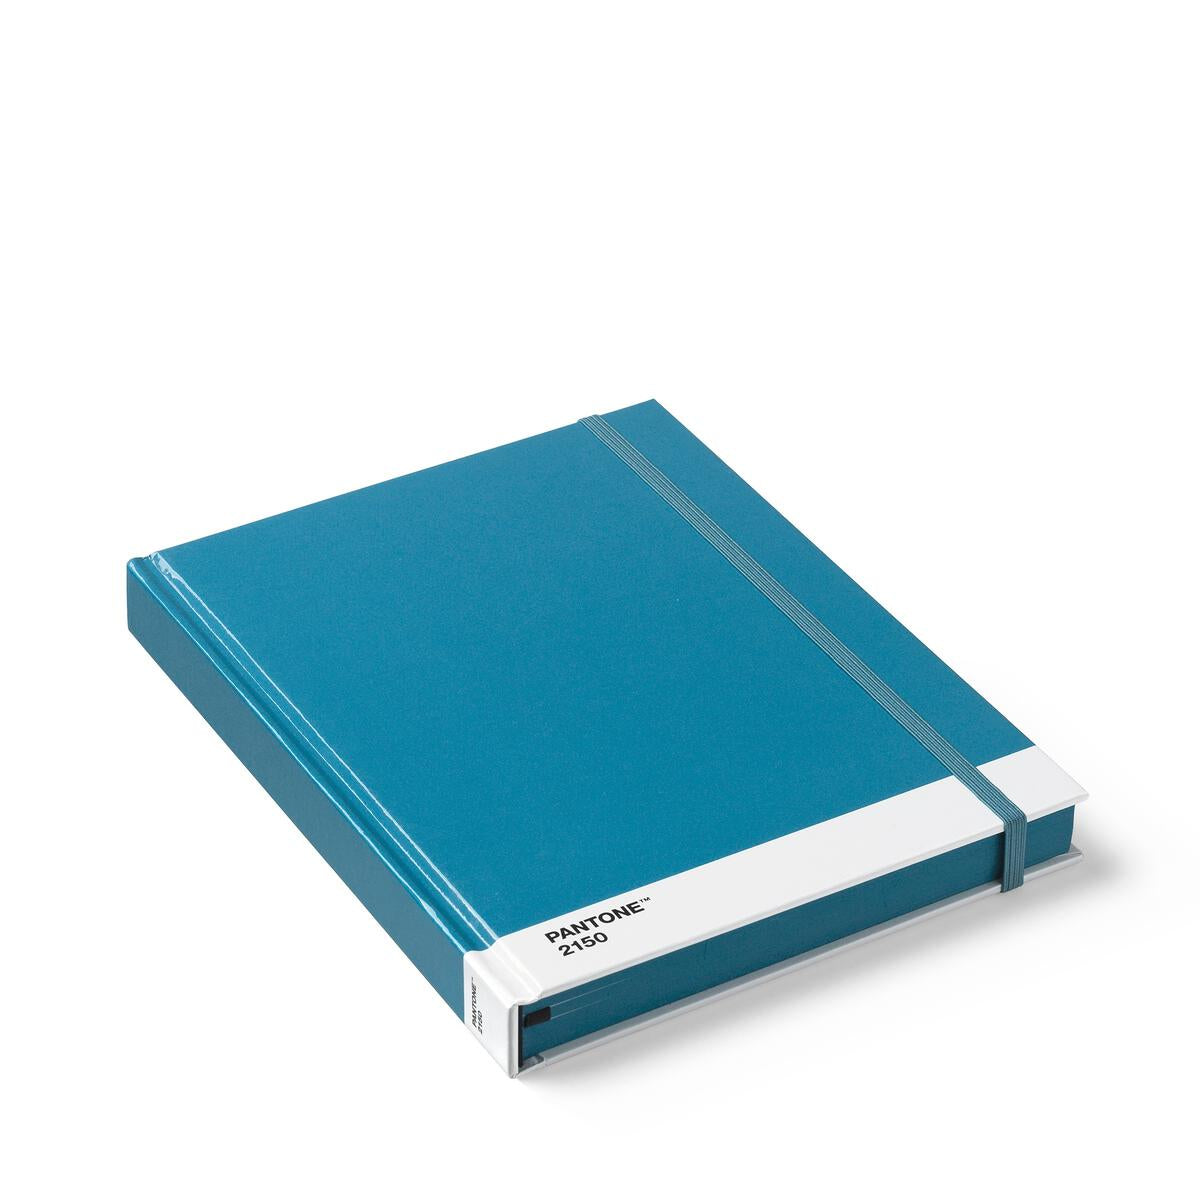 Pantone Large Notebook Blue 2150 by Pantone Living. Australian Art Prints and Homewares. Green Door Decor. www.greendoordecor.com.au